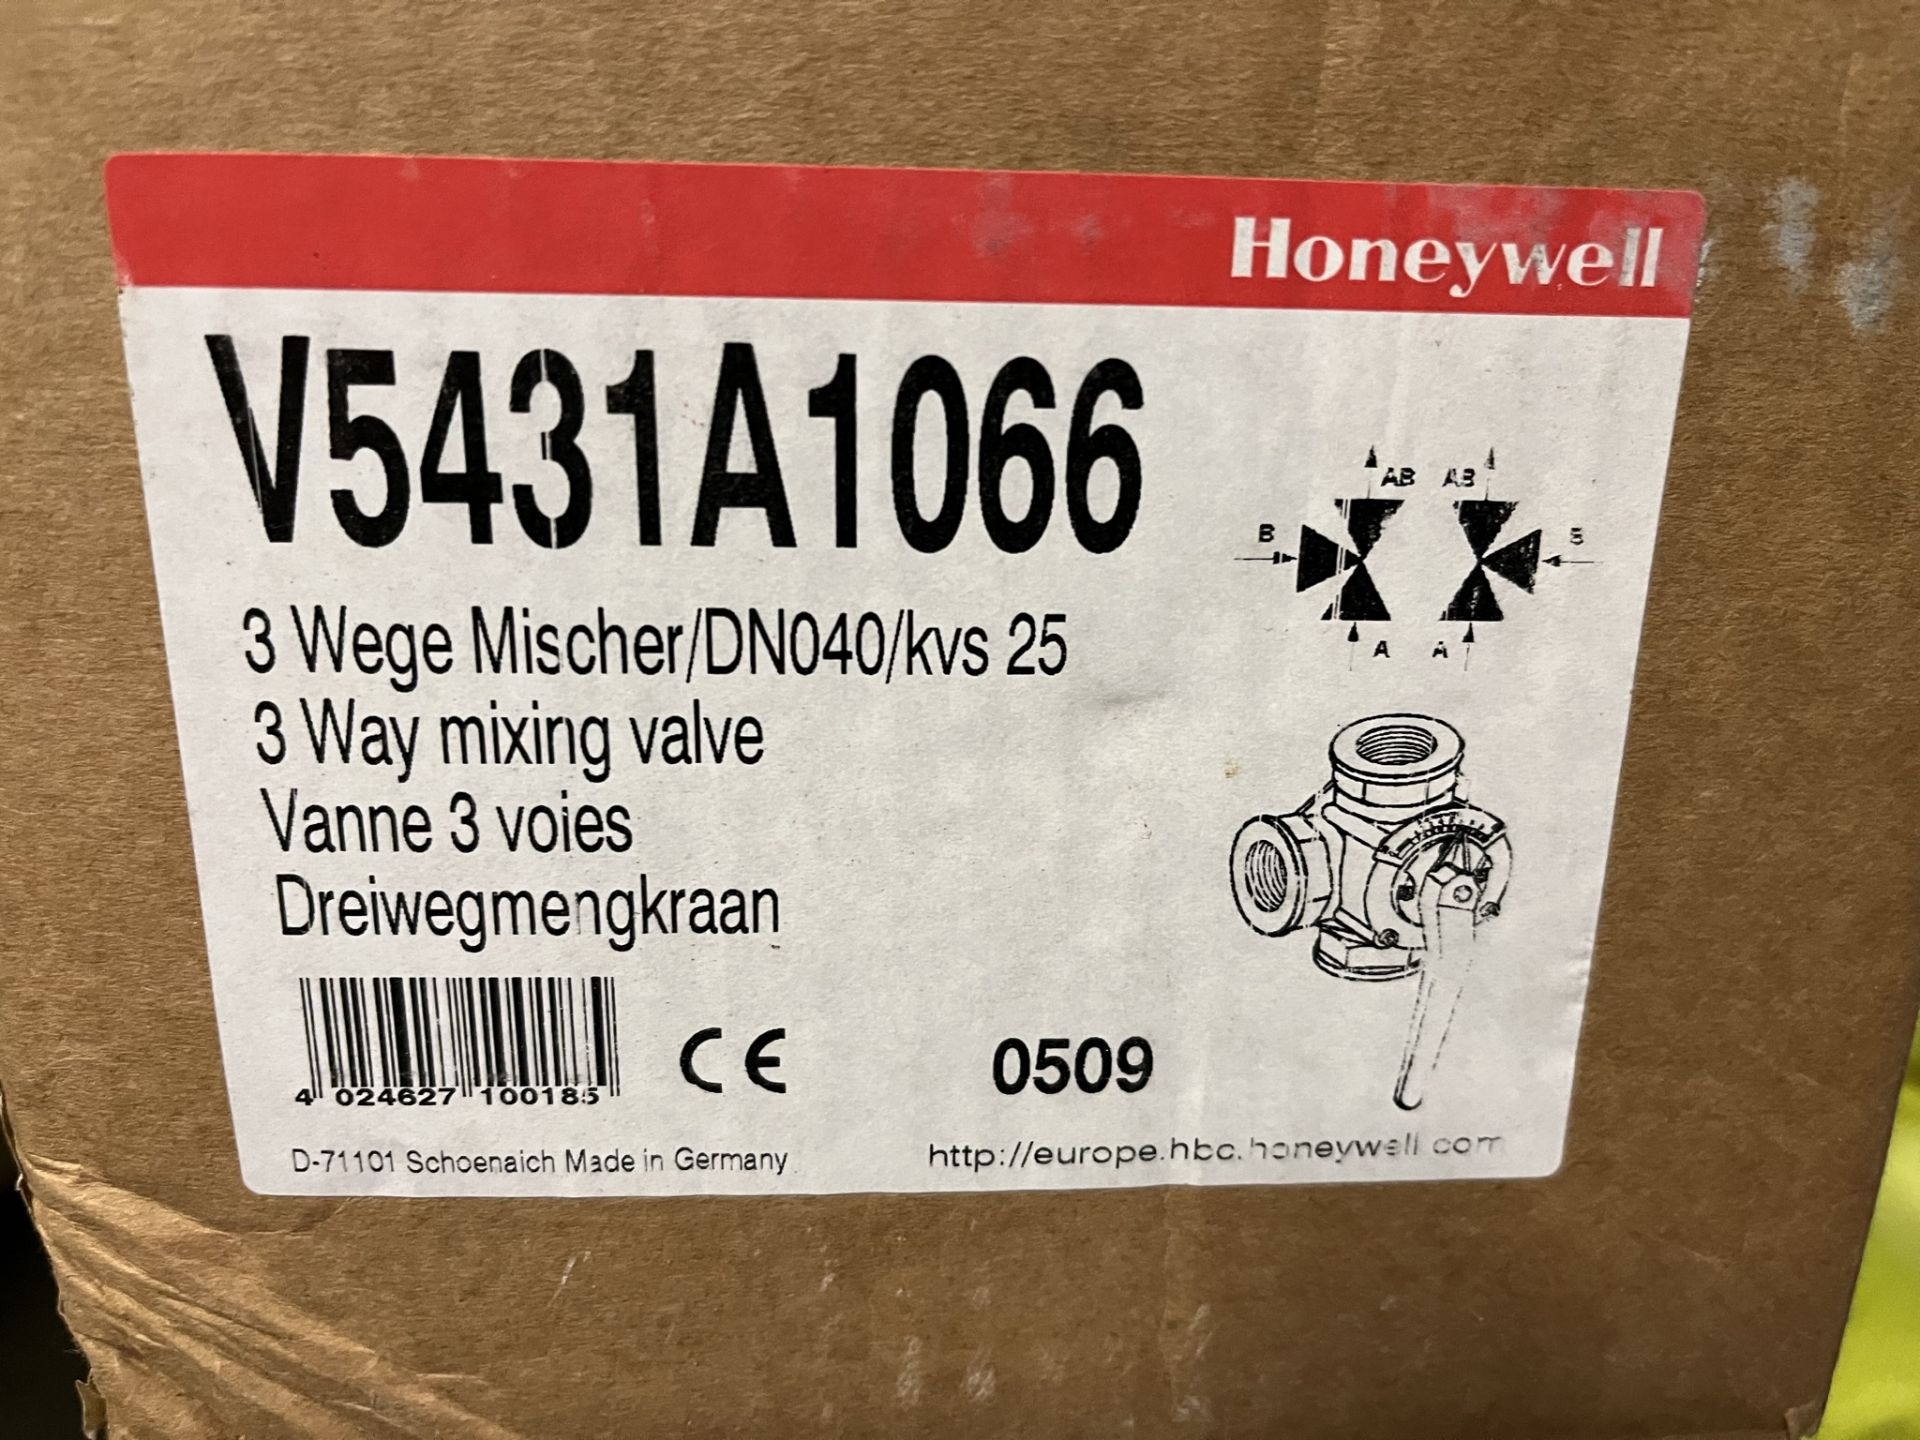 2 x Honeywell V5431A1066 3 Way Mixing Valves - Image 3 of 3